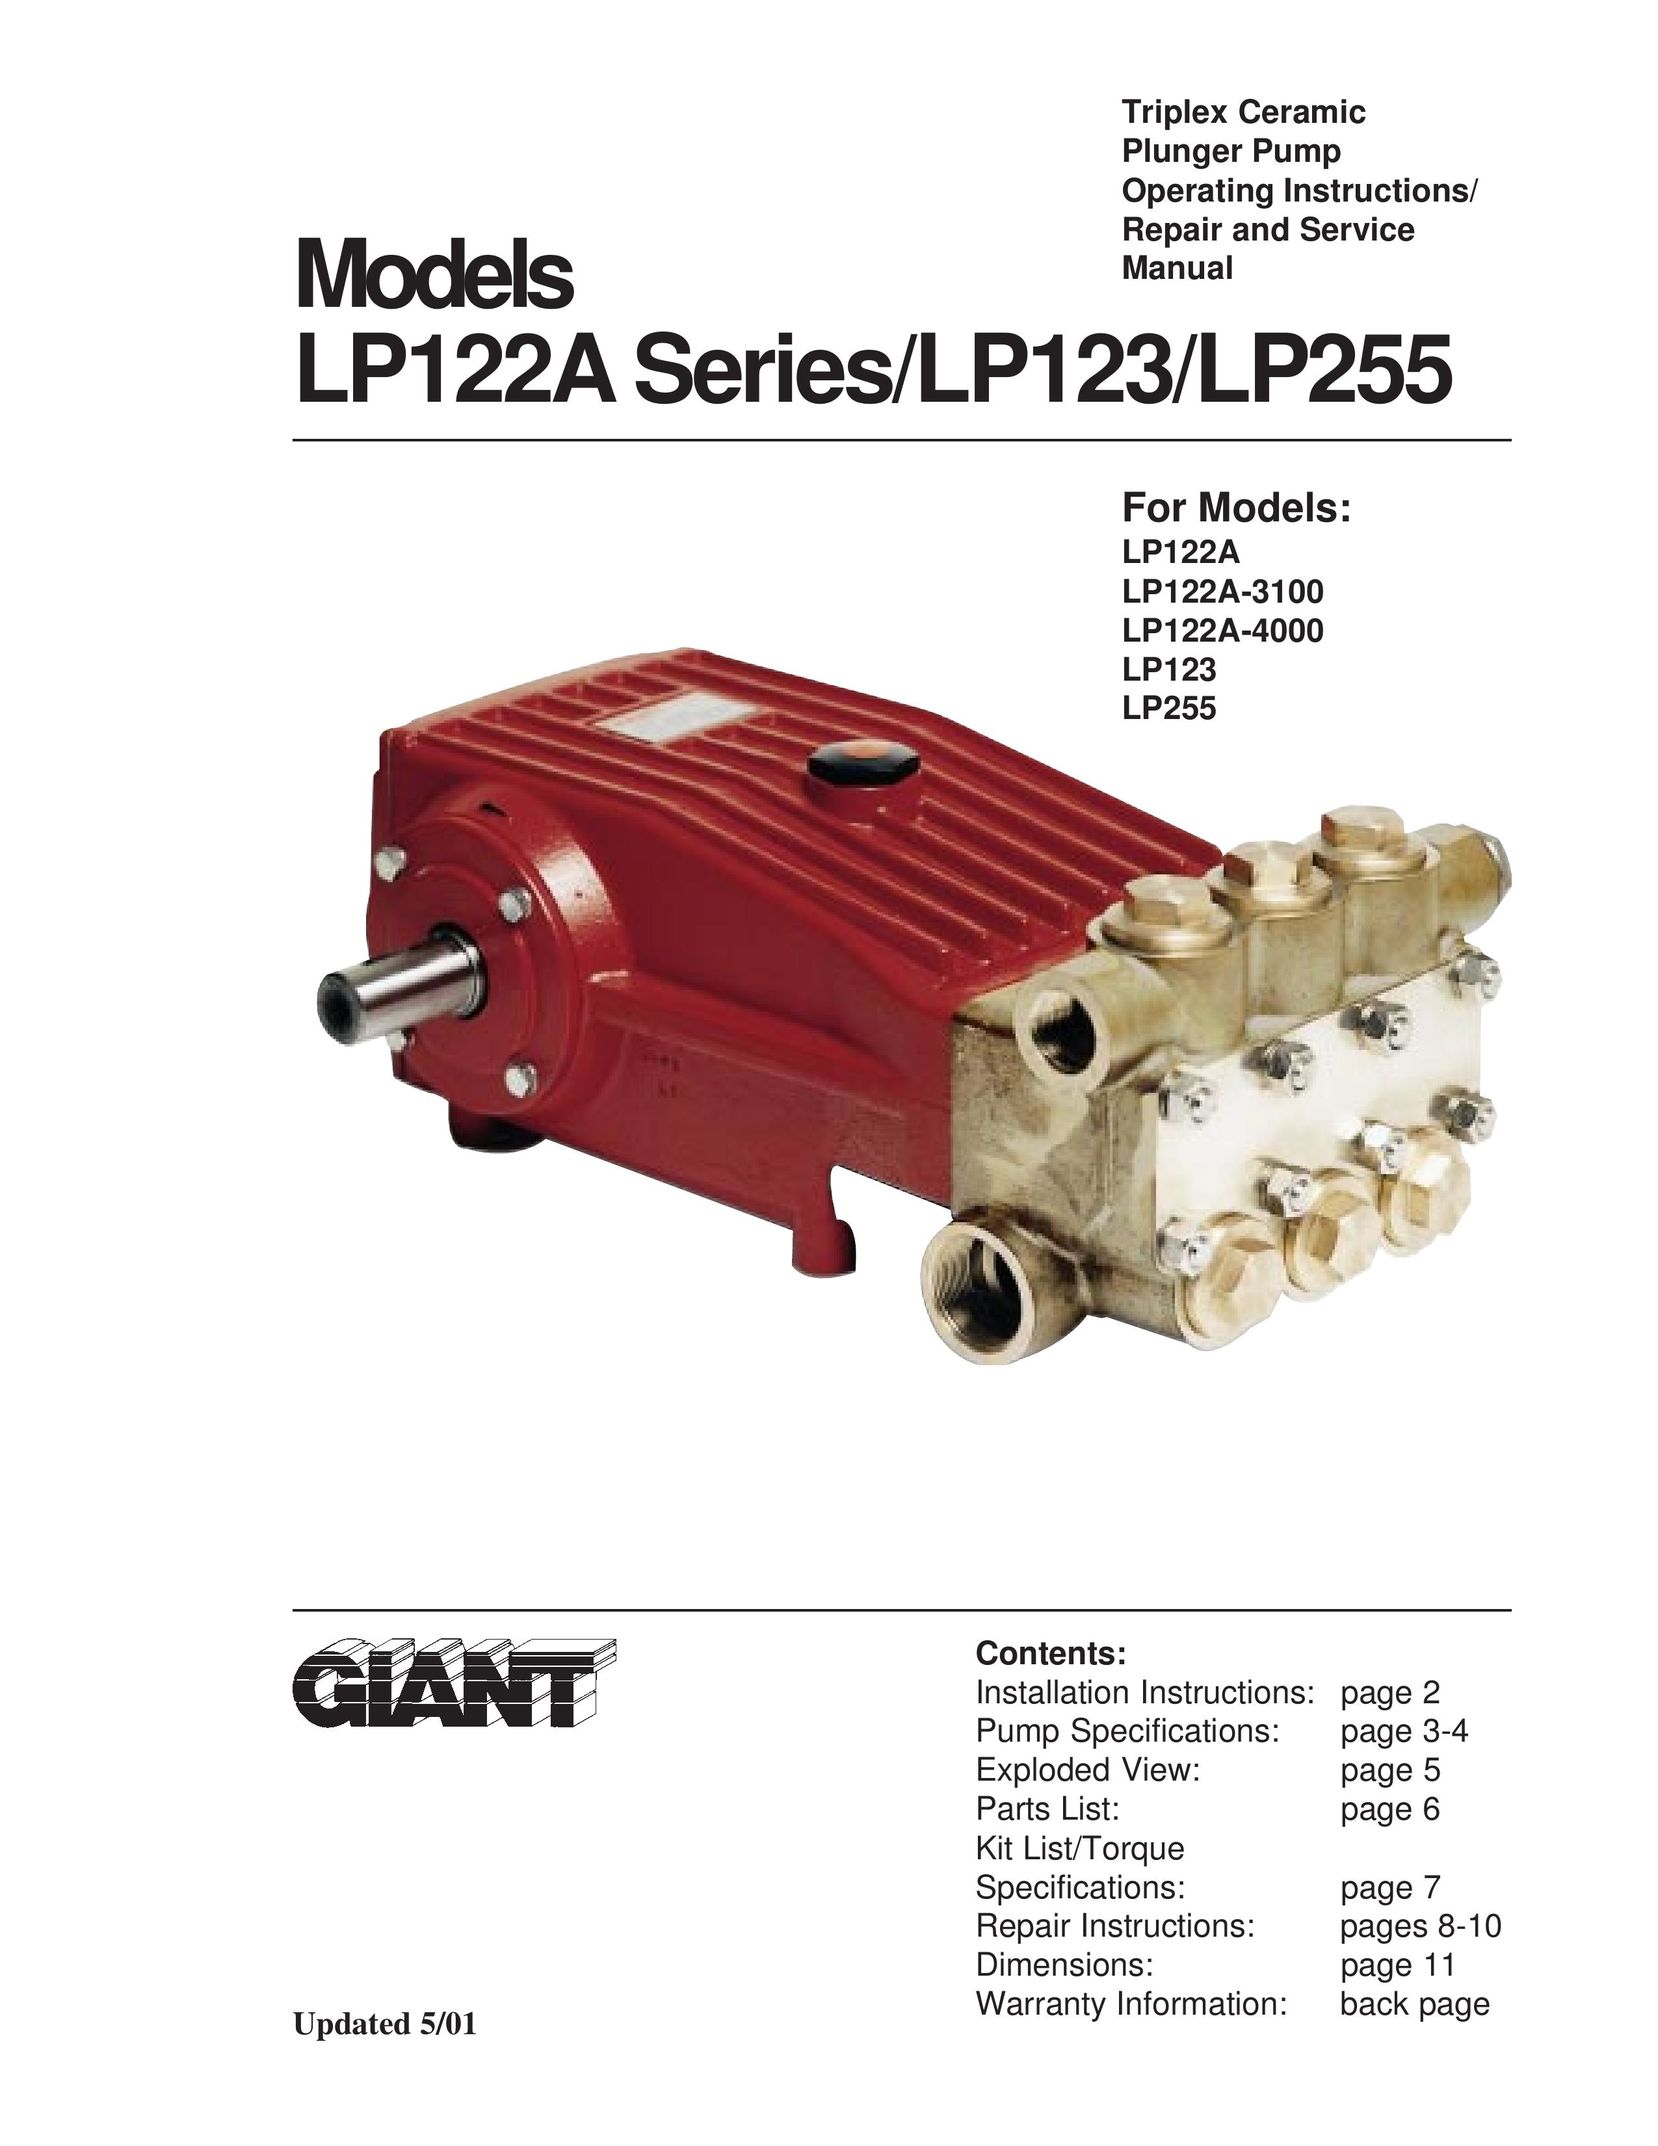 Giant LP122A-4000 Water Pump User Manual